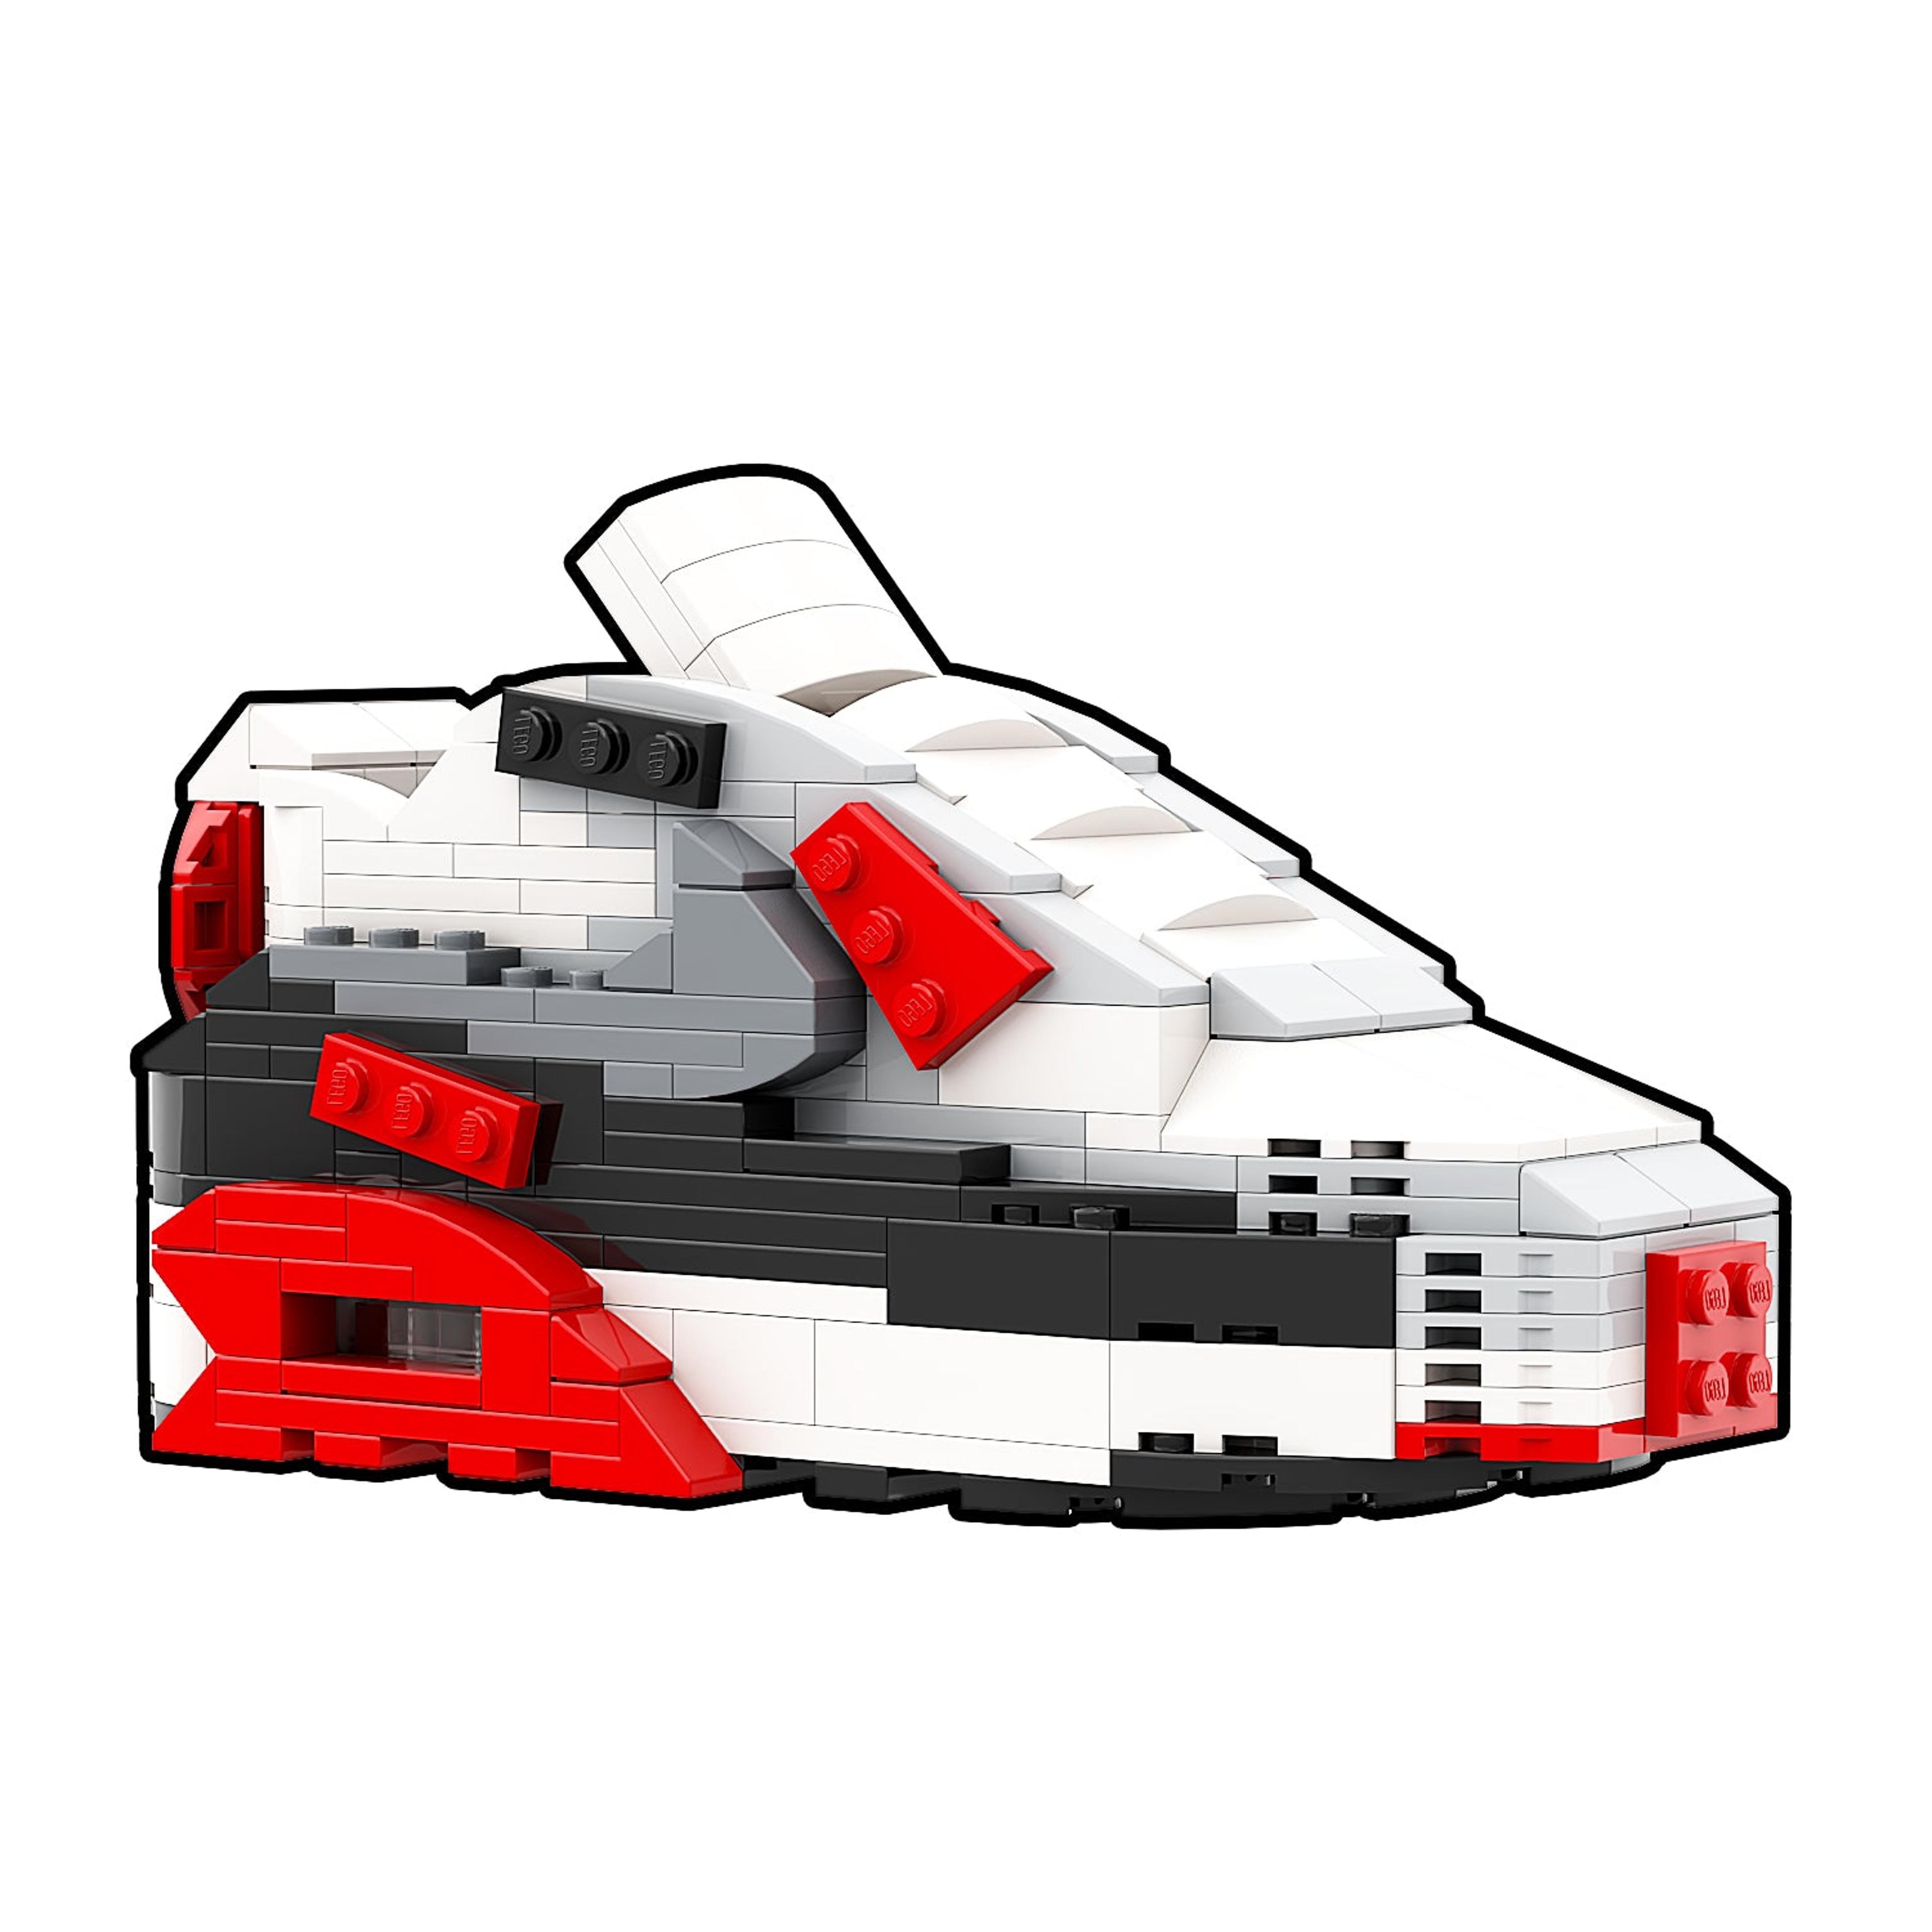 Alternate View 6 of REGULAR "Air Max 90 Infrared" Sneaker Bricks with Mini Figure